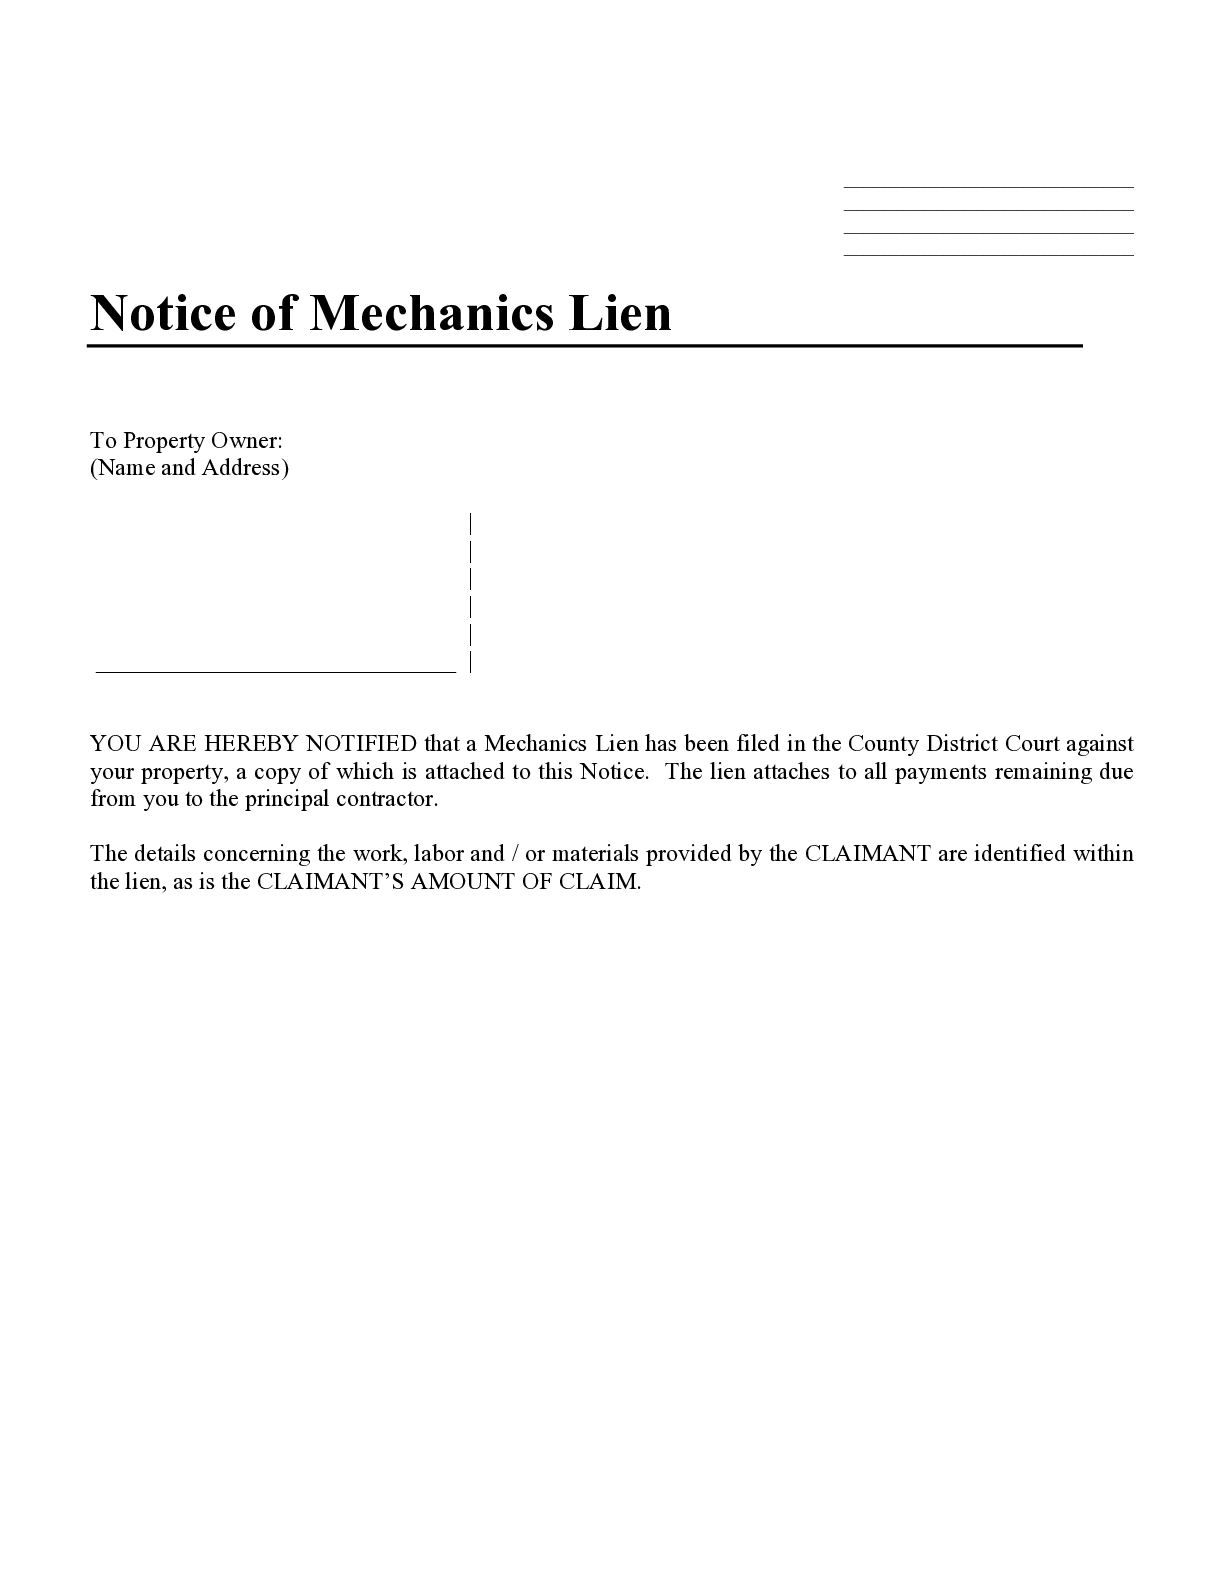 Iowa Notice of Mechanics Lien Form - free from